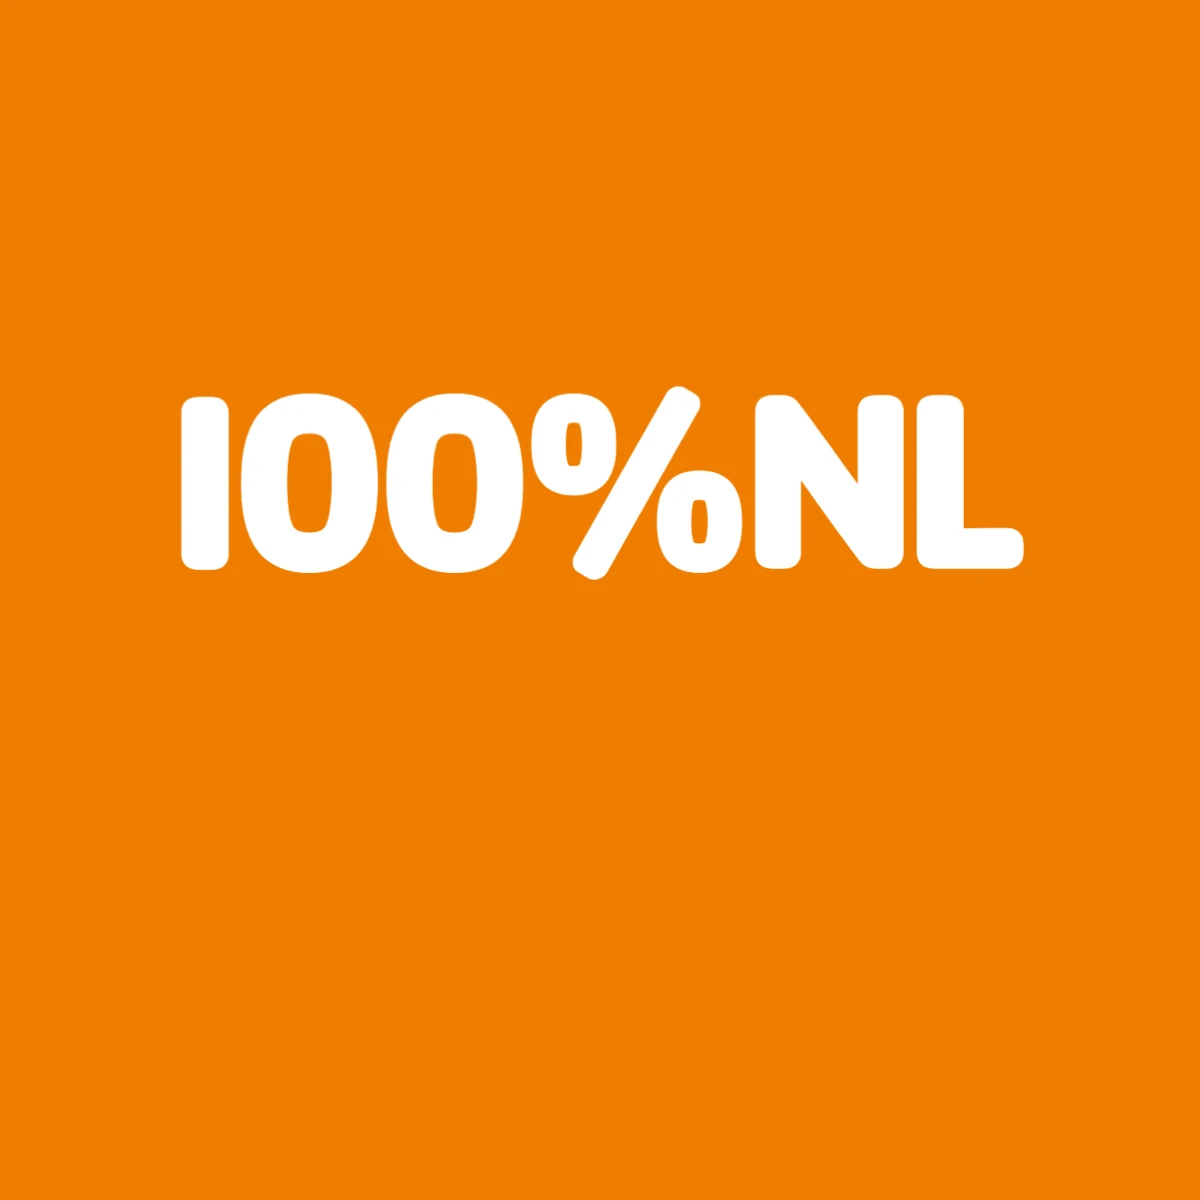 100% NL – Tanpa henti